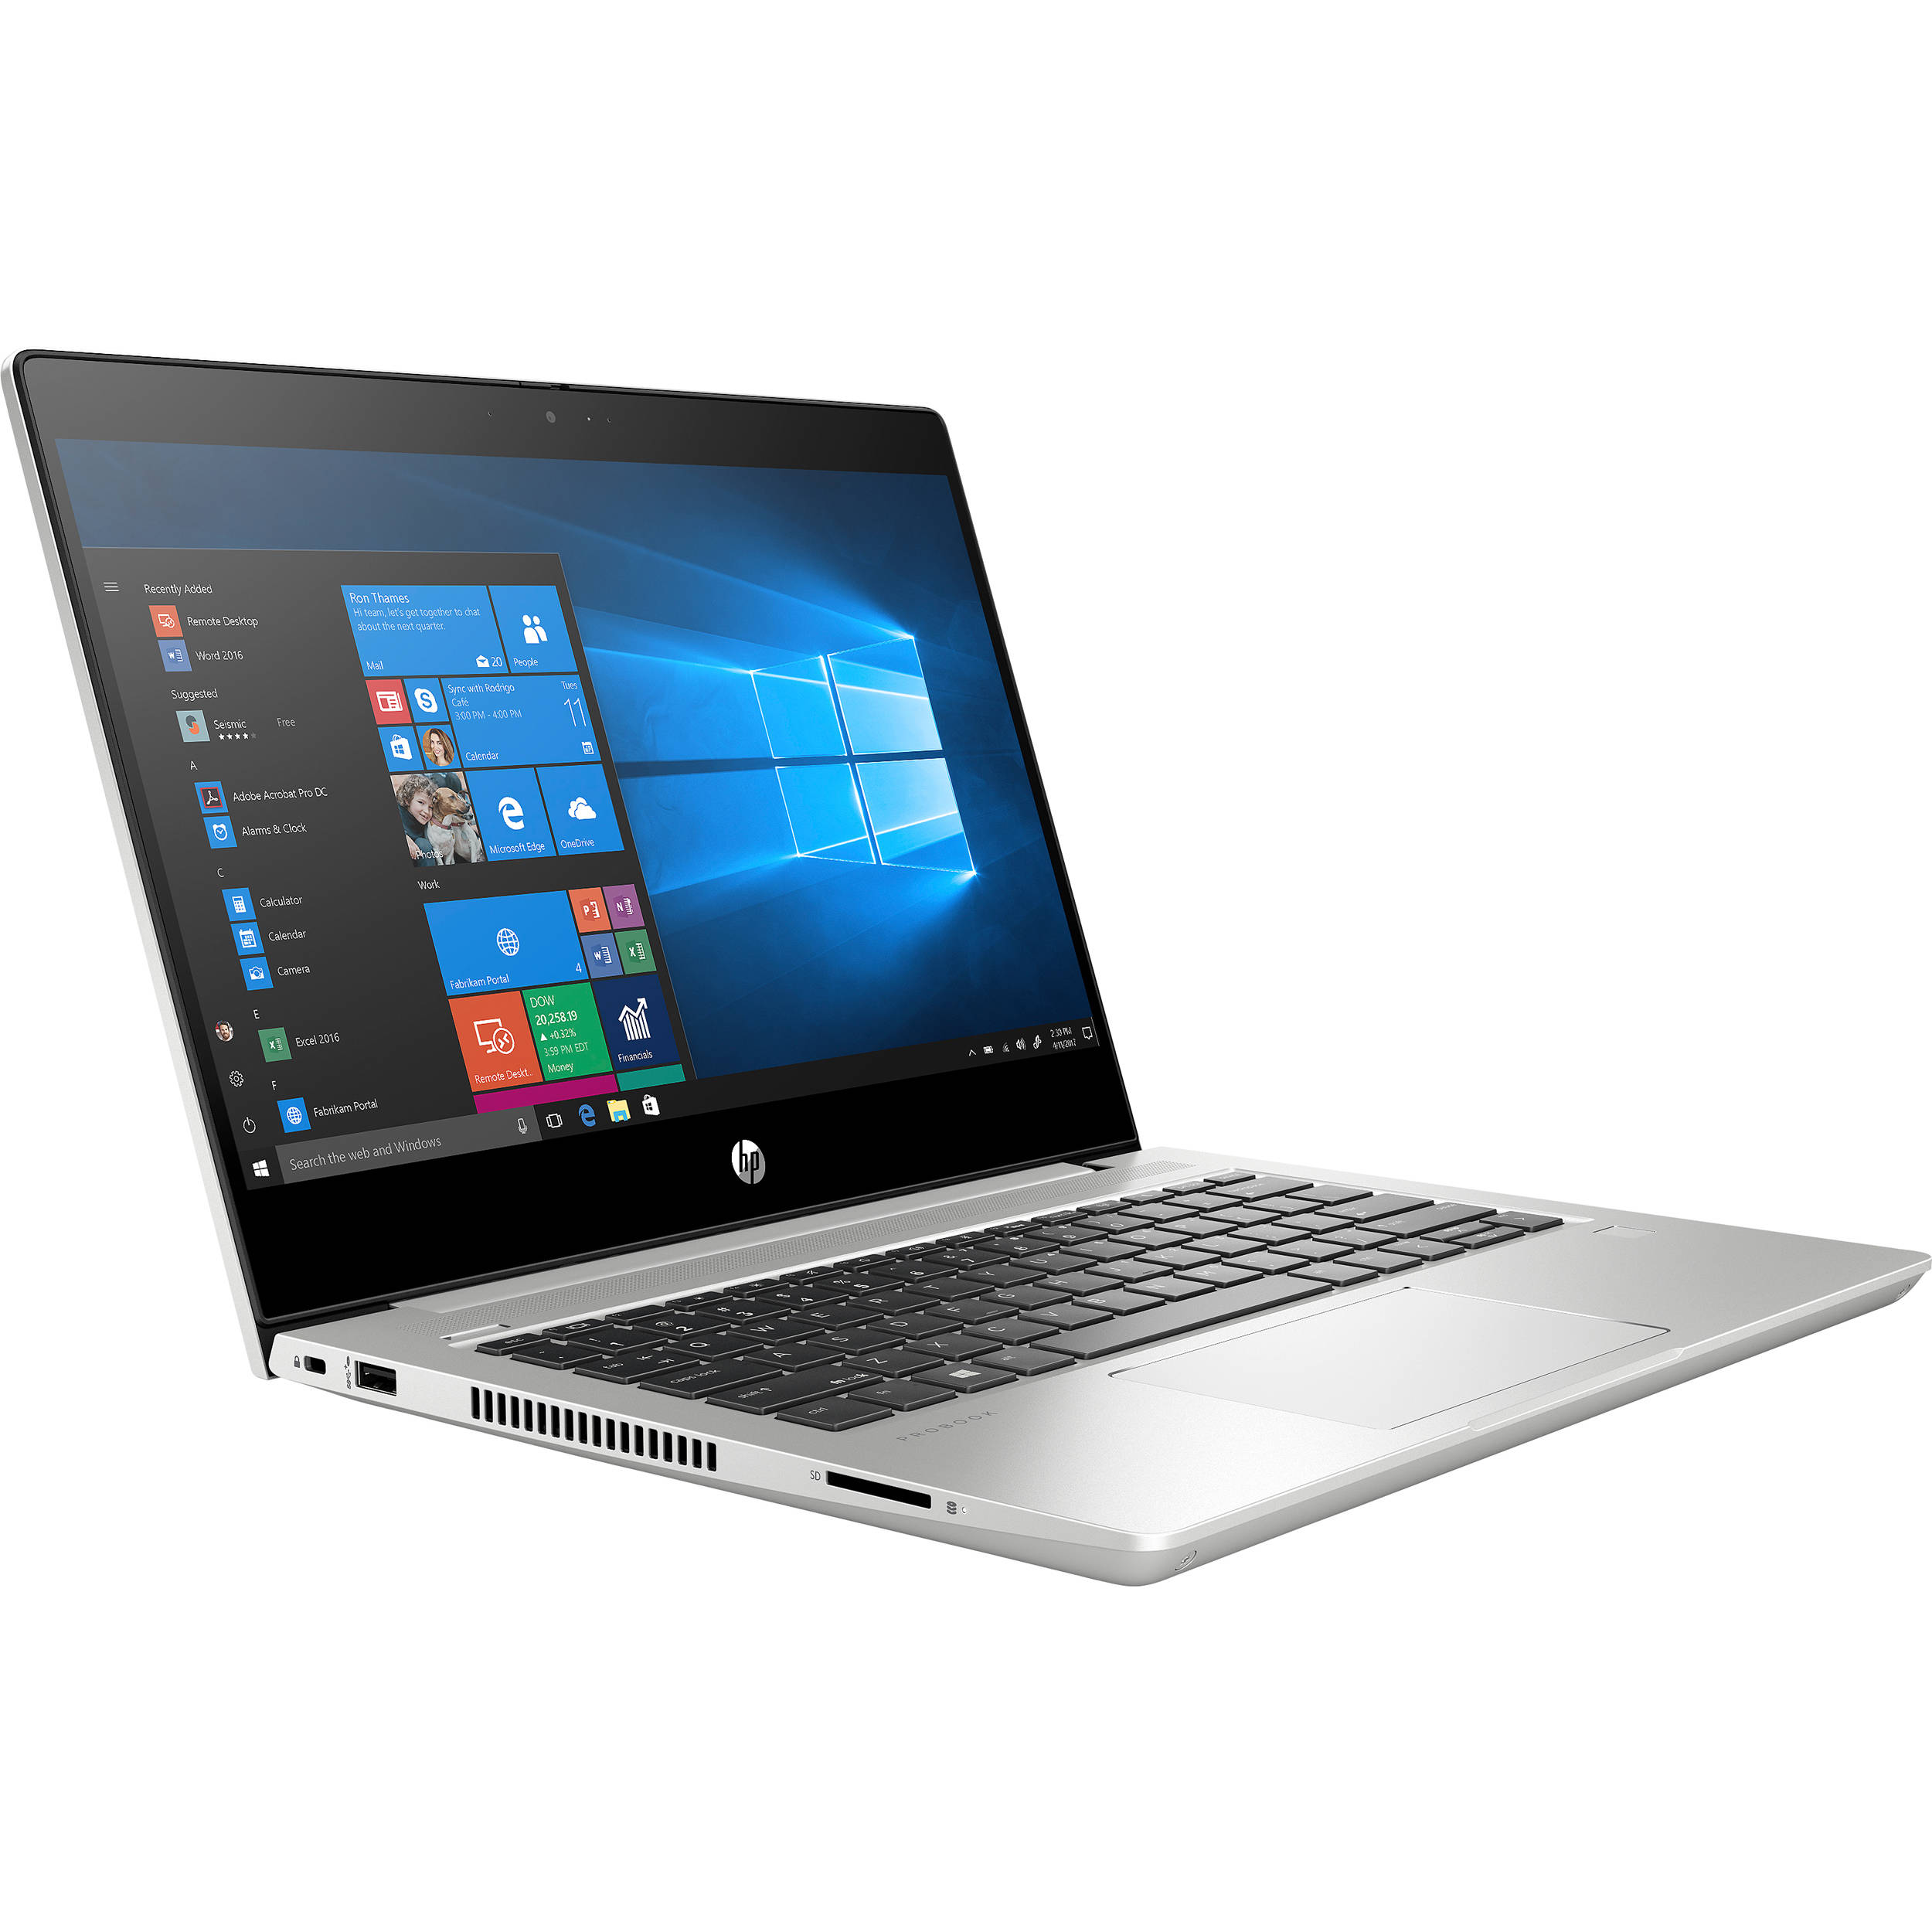 HP ProBook 430 G7, Core i5-10210U 1.6/4.2Ghz, 8GB, 256GB SSD, 13.3" FHD, Win 10 Pro 64, 3 Year Warranty